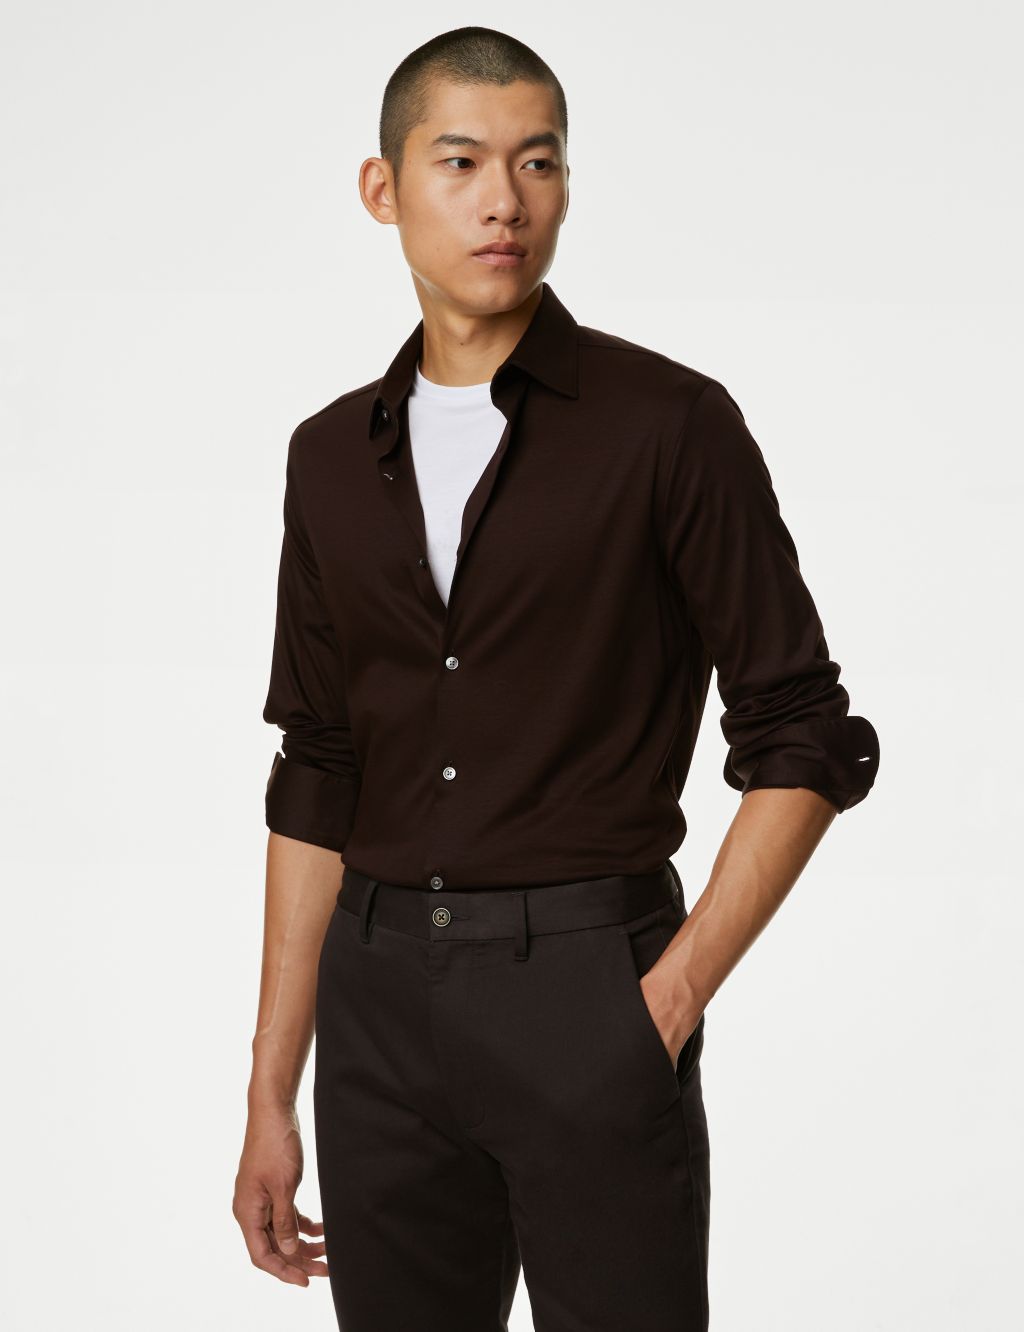 Black Shirt with Brown Pants